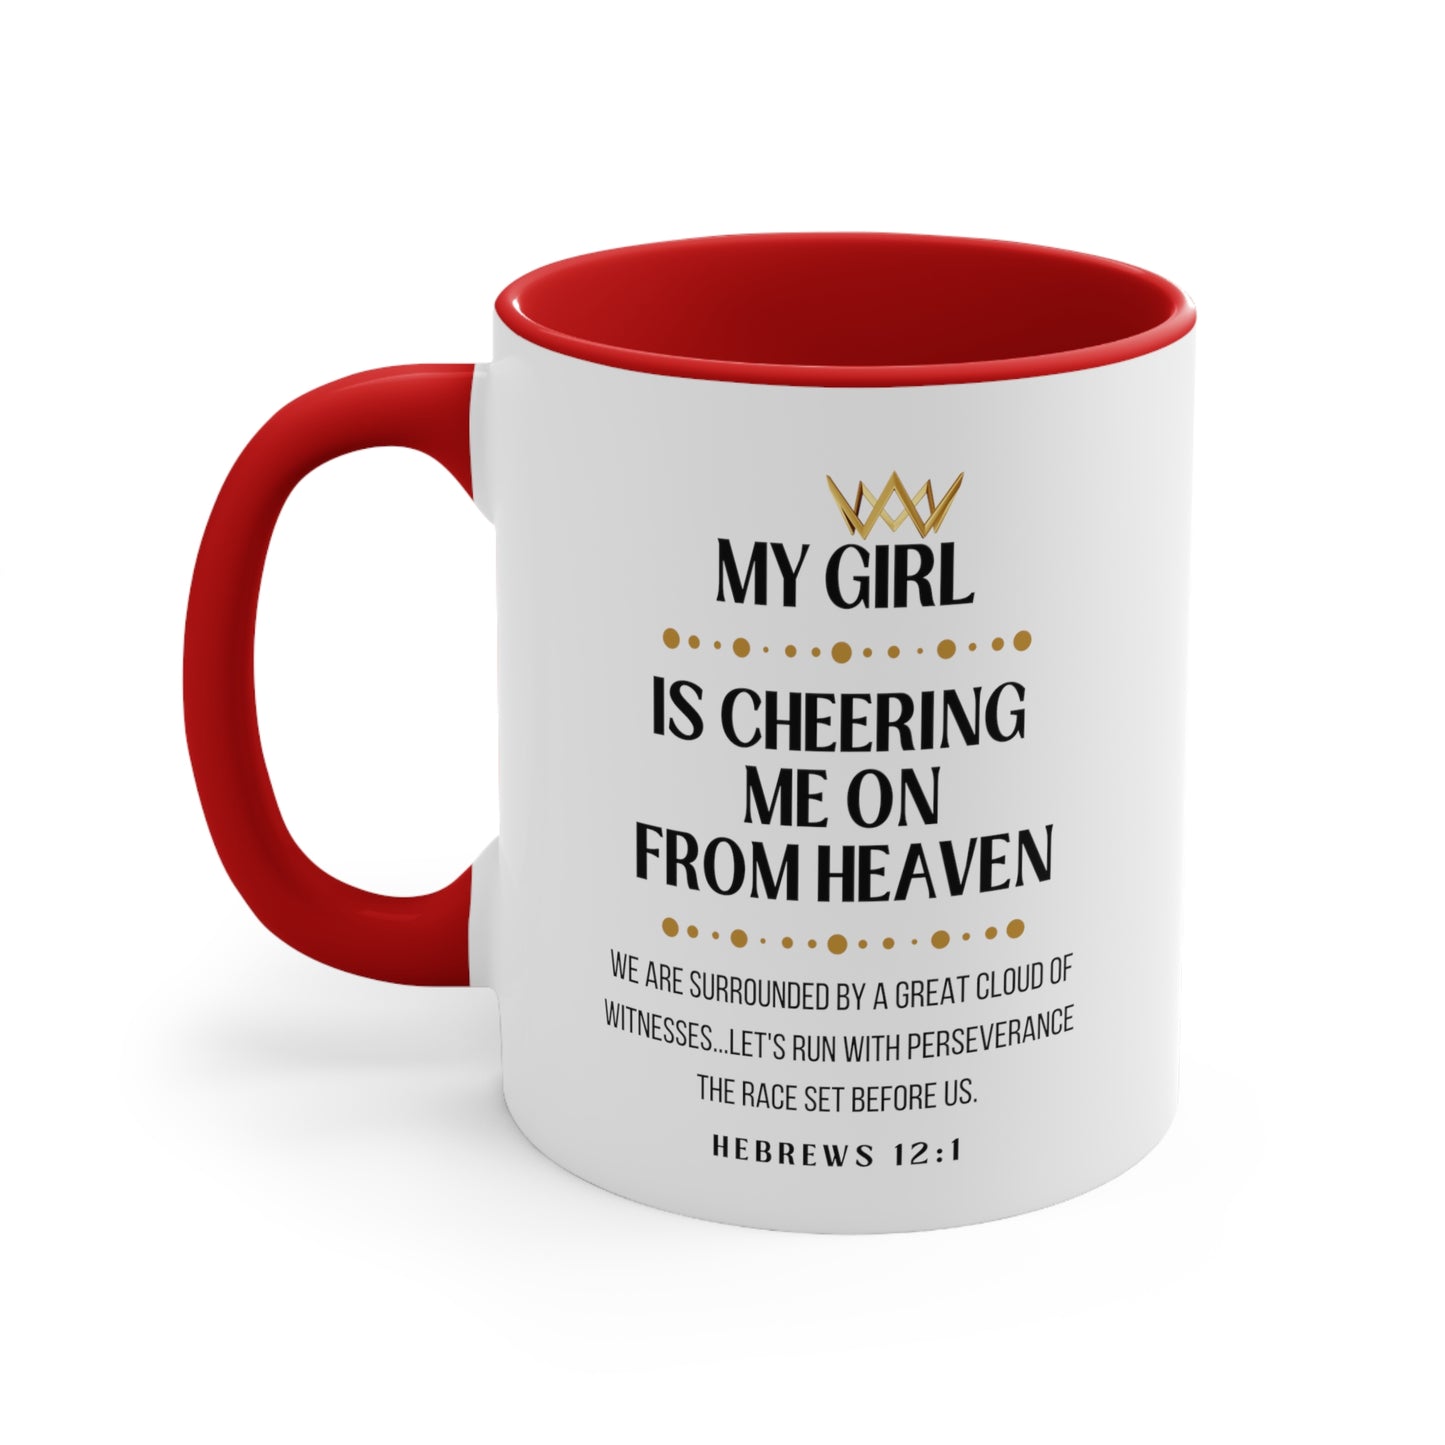 My Girl Memorial Gift Mug, Cheering Me On From Heaven